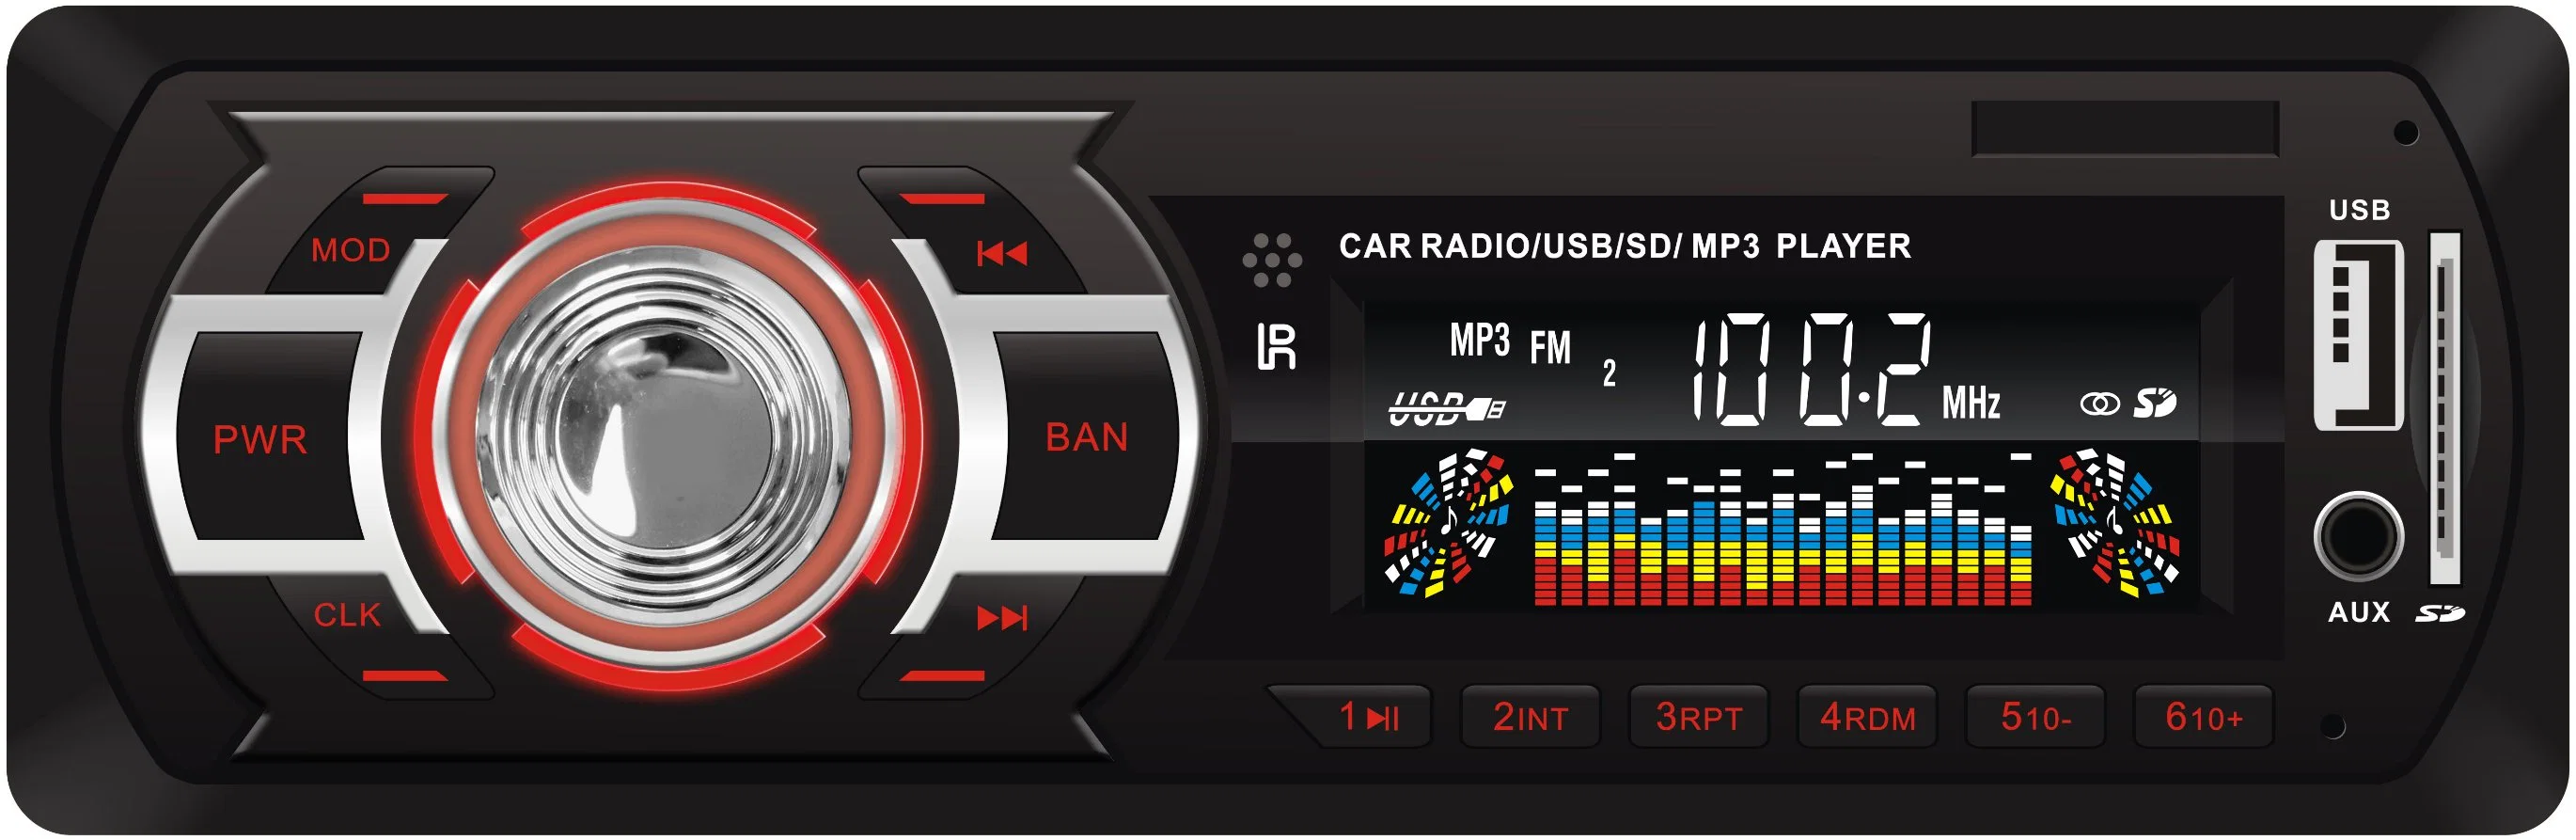 Hochwertige Auto Stereo Auto Radio MP3 SD Aux USB